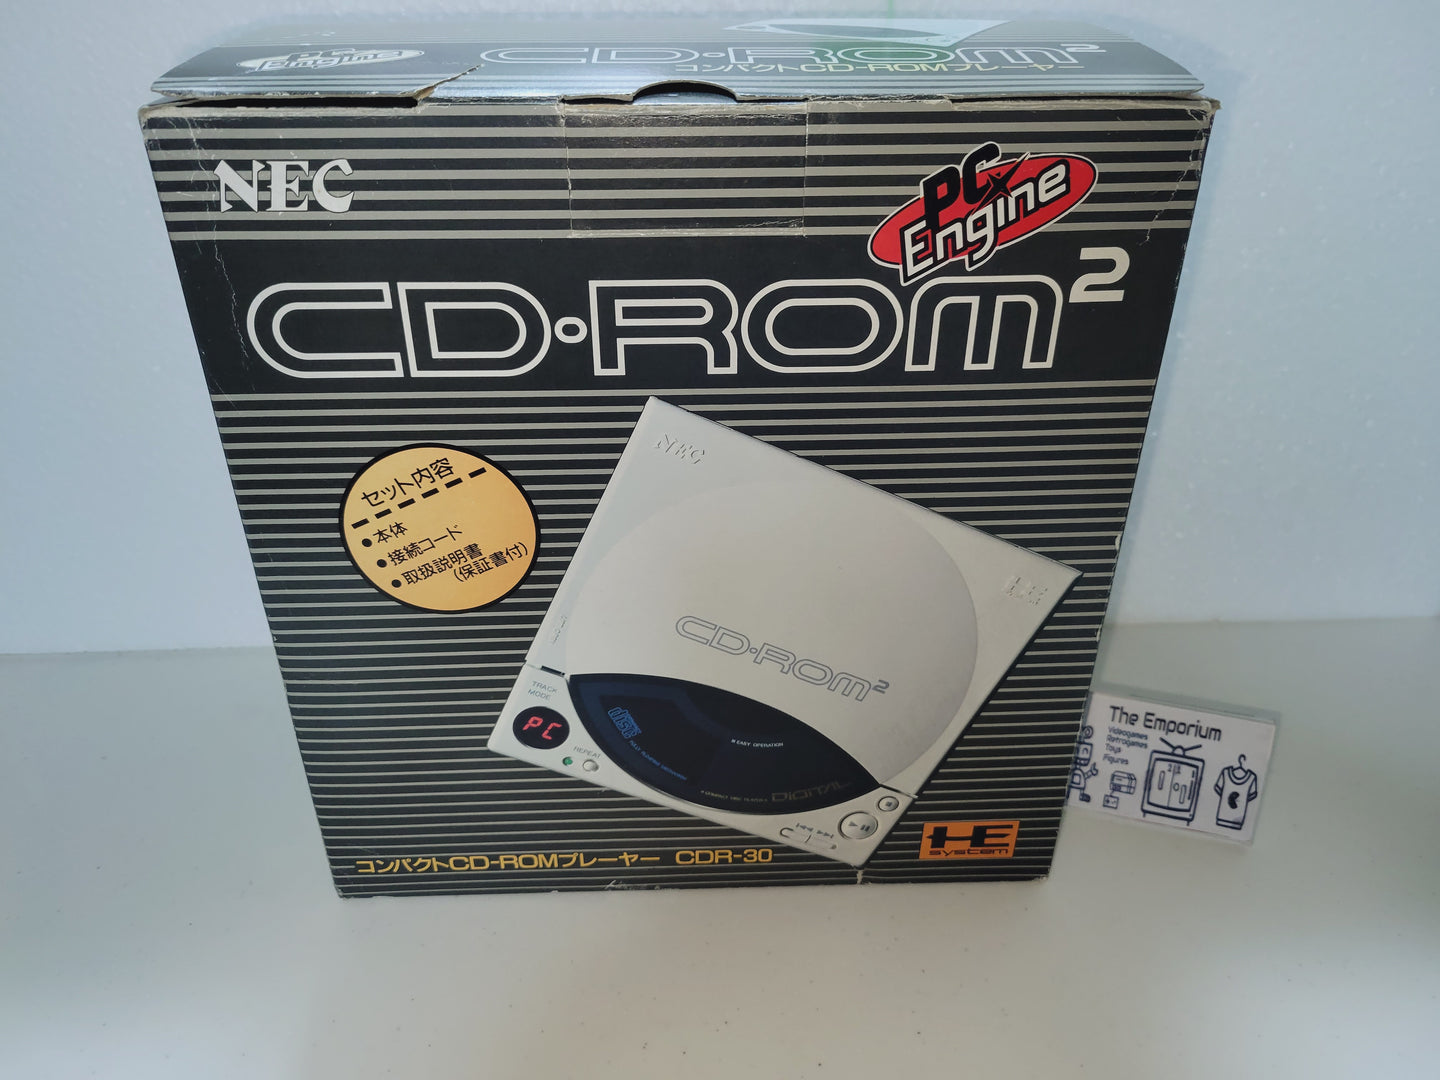 PC Engine CD-ROM2 [CDR-30] - Nec Pce PcEngine